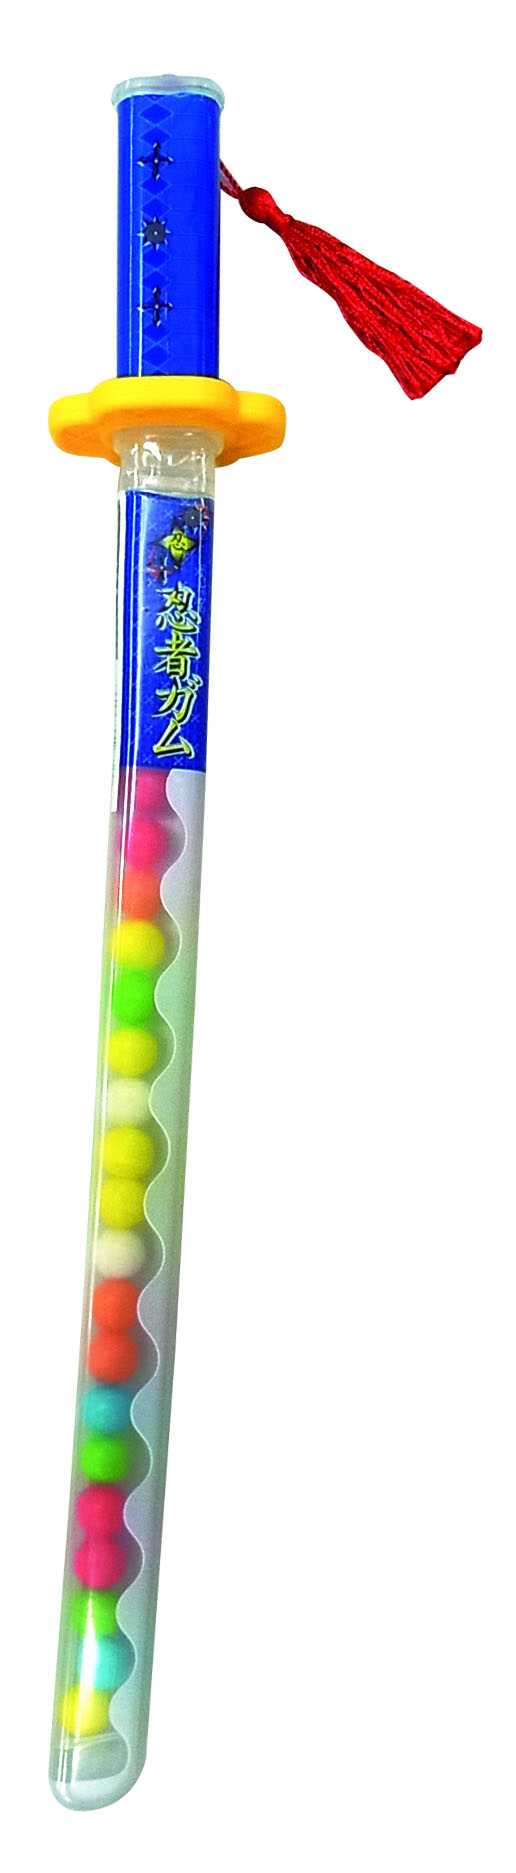 Toy x Candy Combi - Ninja sword gum (large)